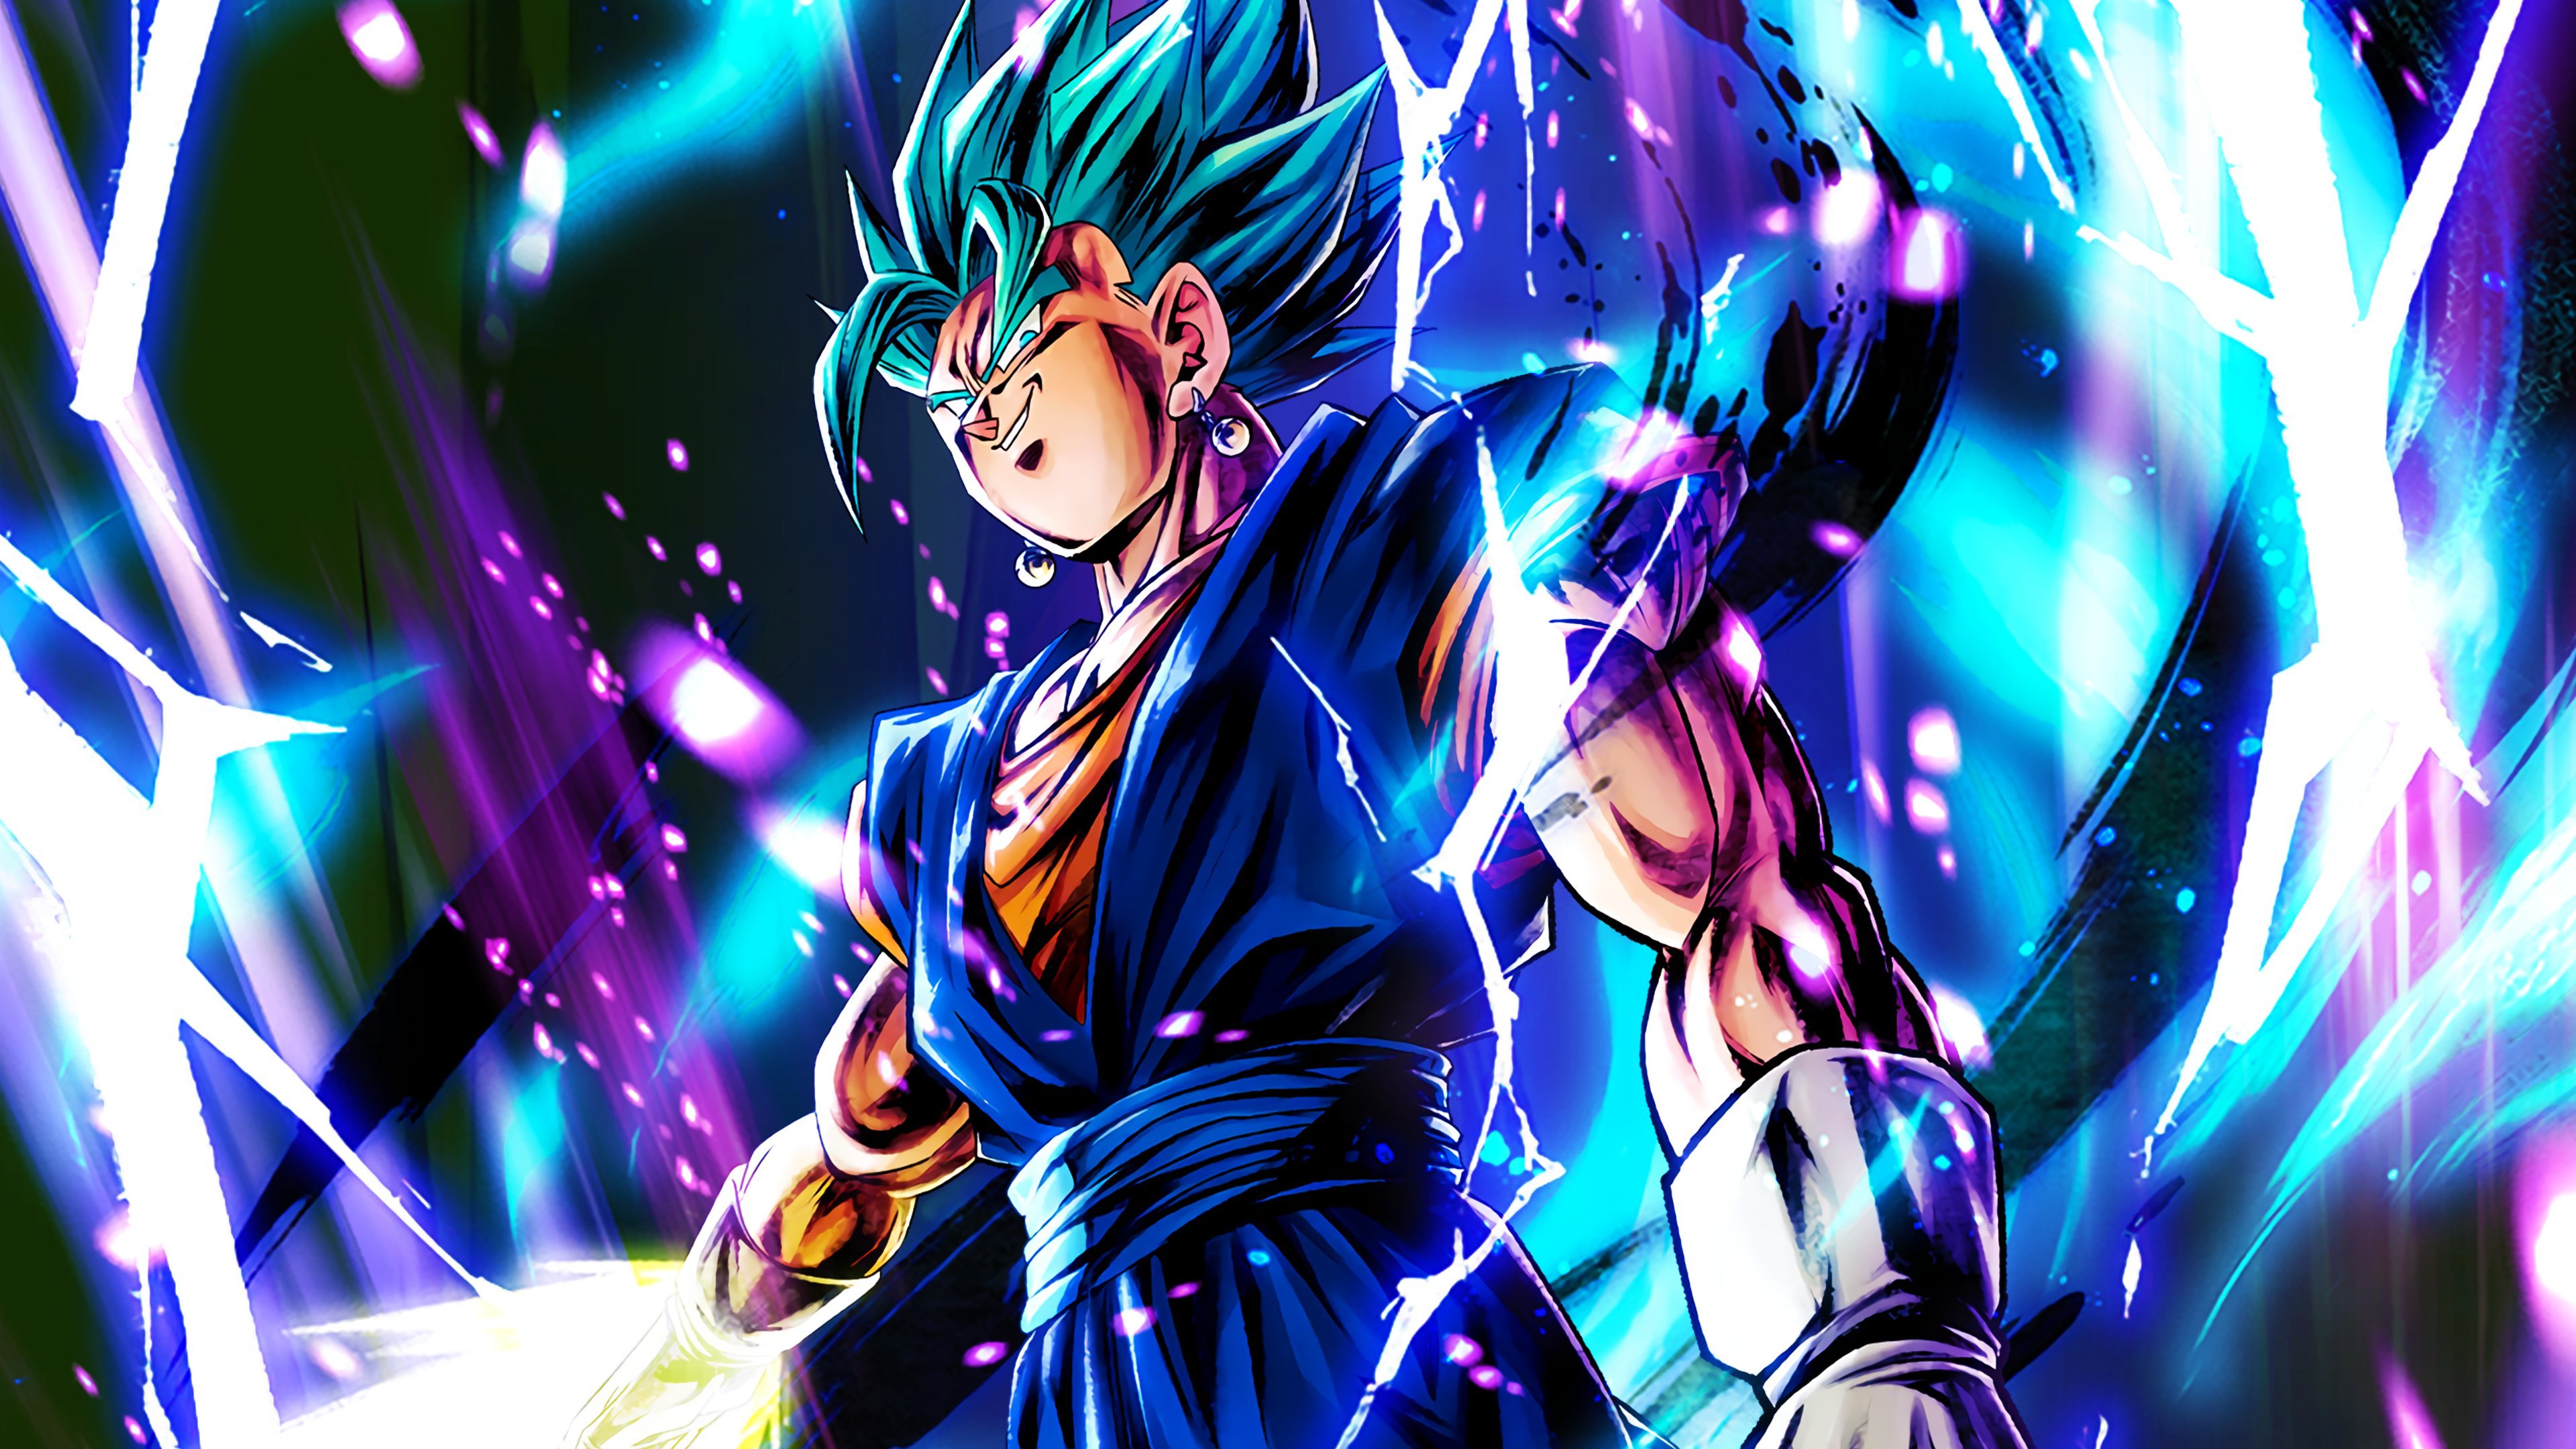 Super Saiyan Blue Vegito from Dragon Ball Super [Dragon Ball Legends Arts]  for Desktop 4K wallpaper download